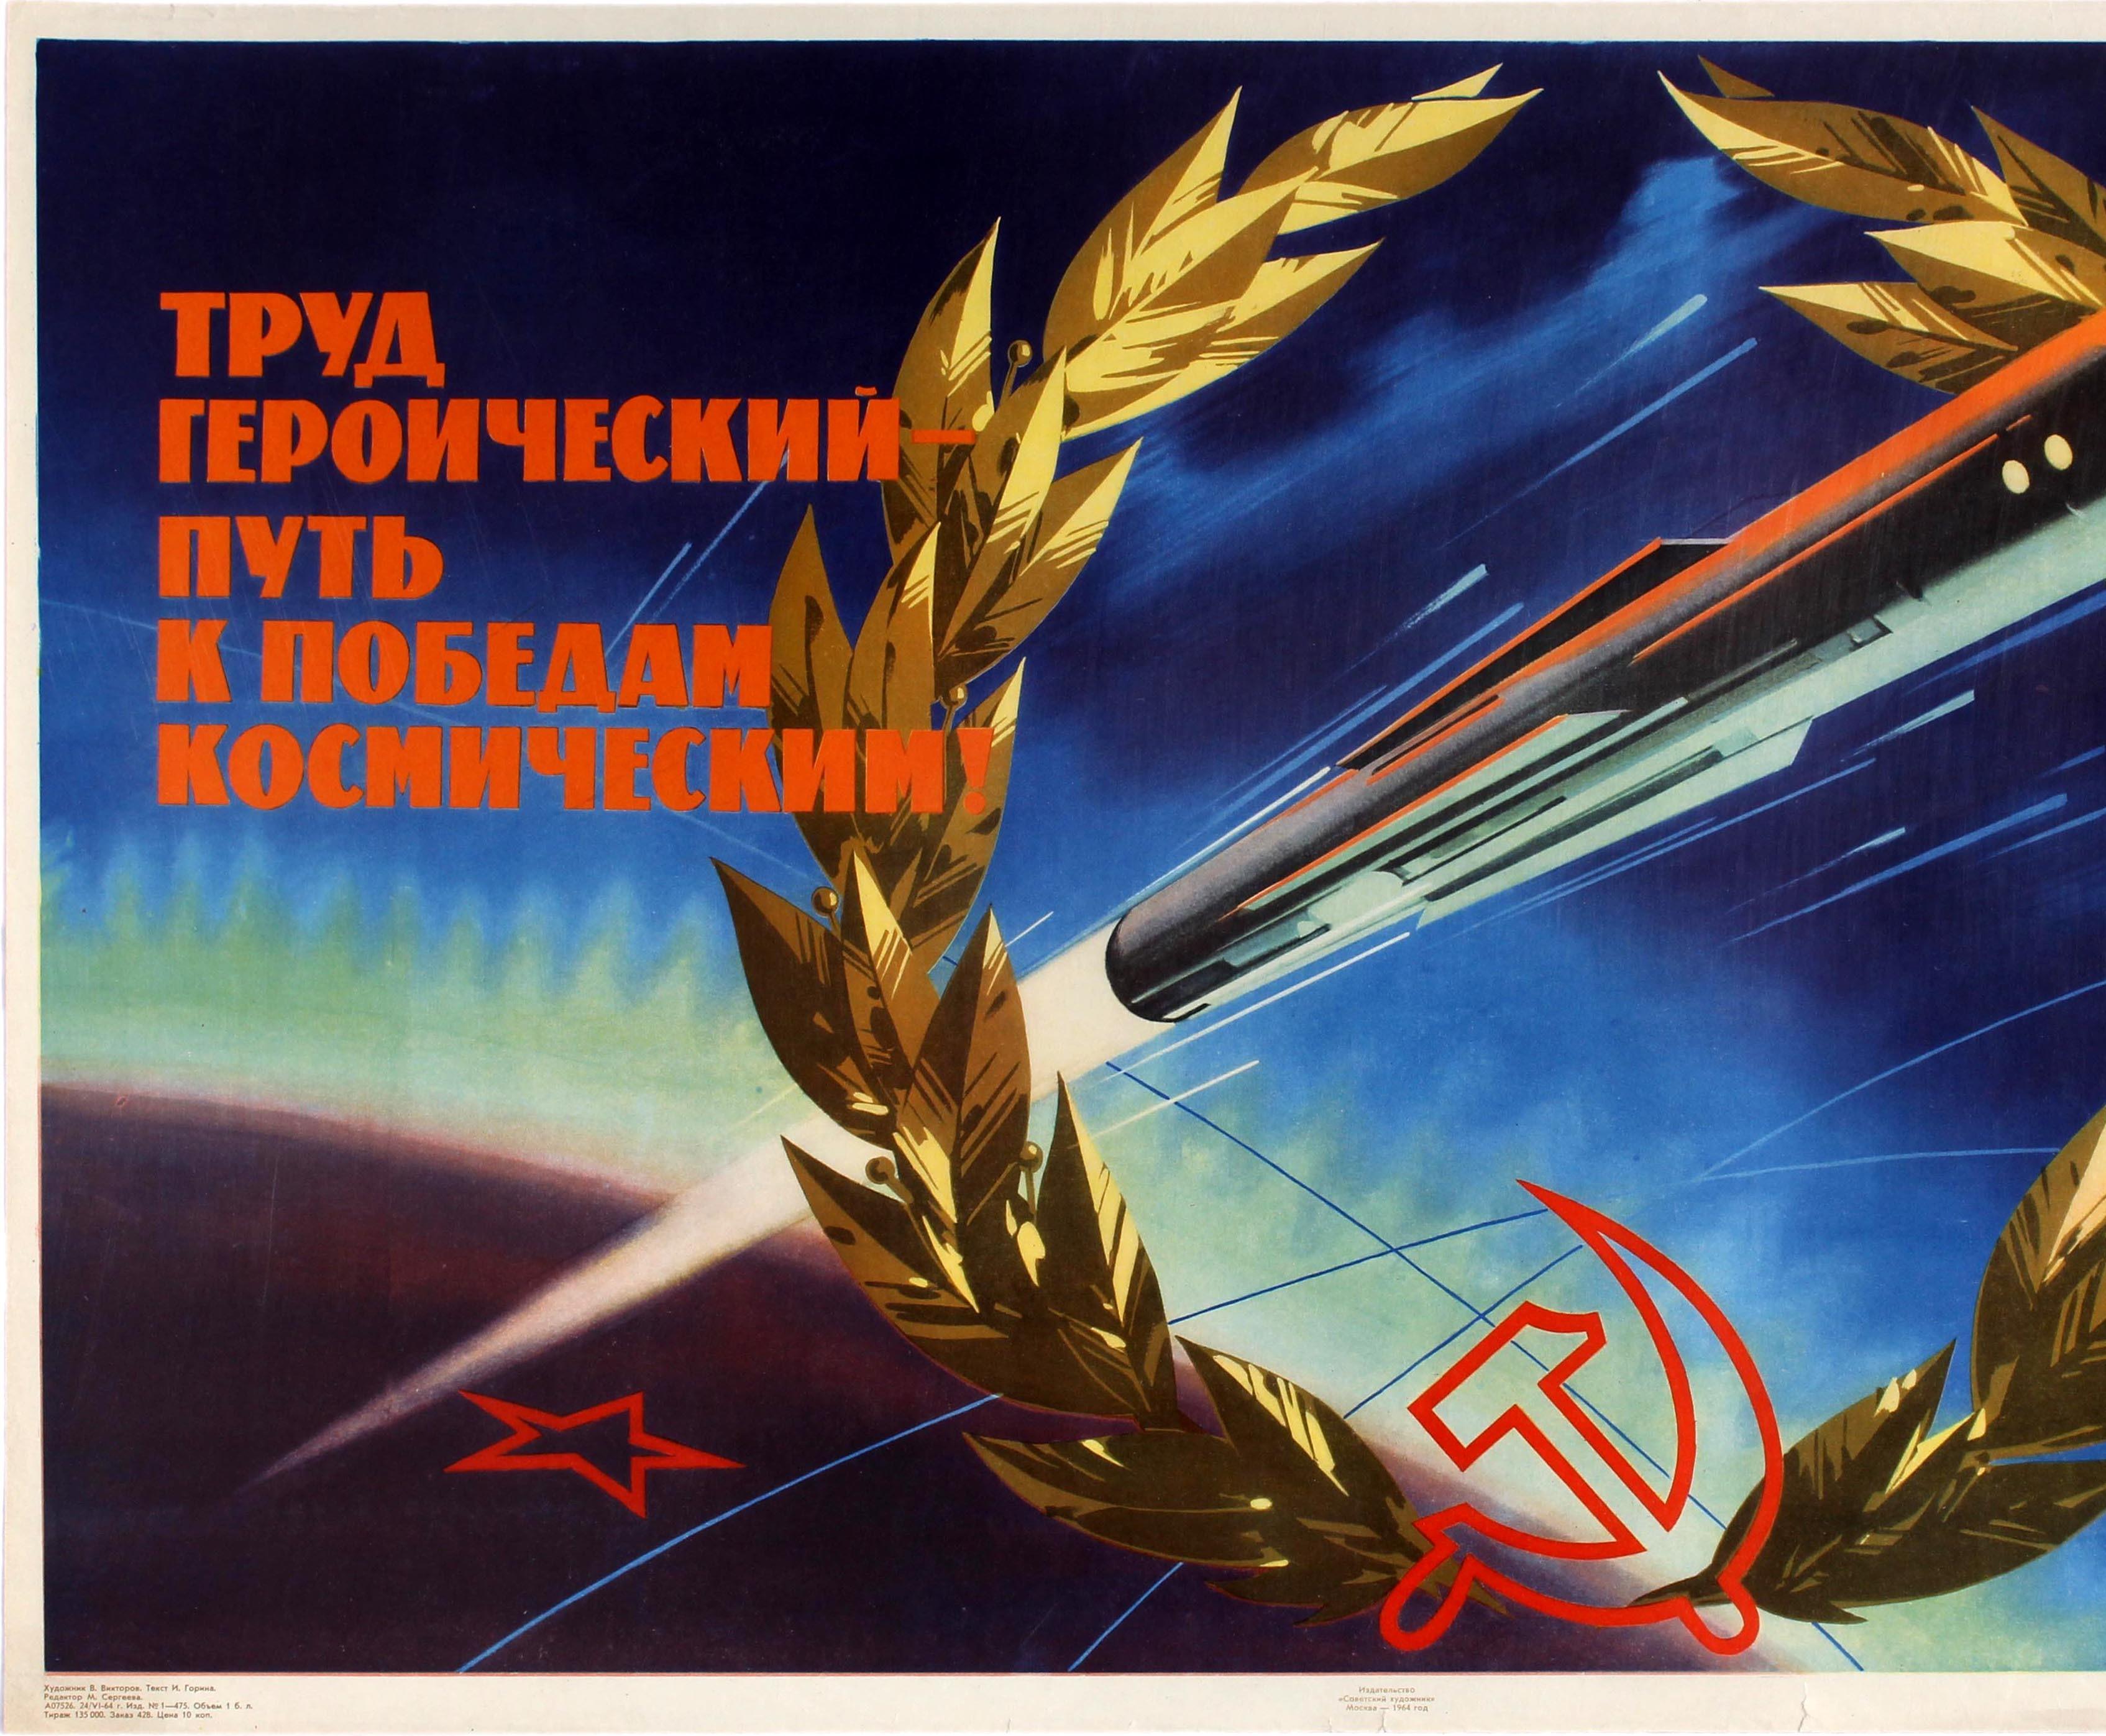 Original Vintage Soviet Space Race Propaganda Poster Heroic Cosmic Victory USSR - Print by Valentin Viktorov